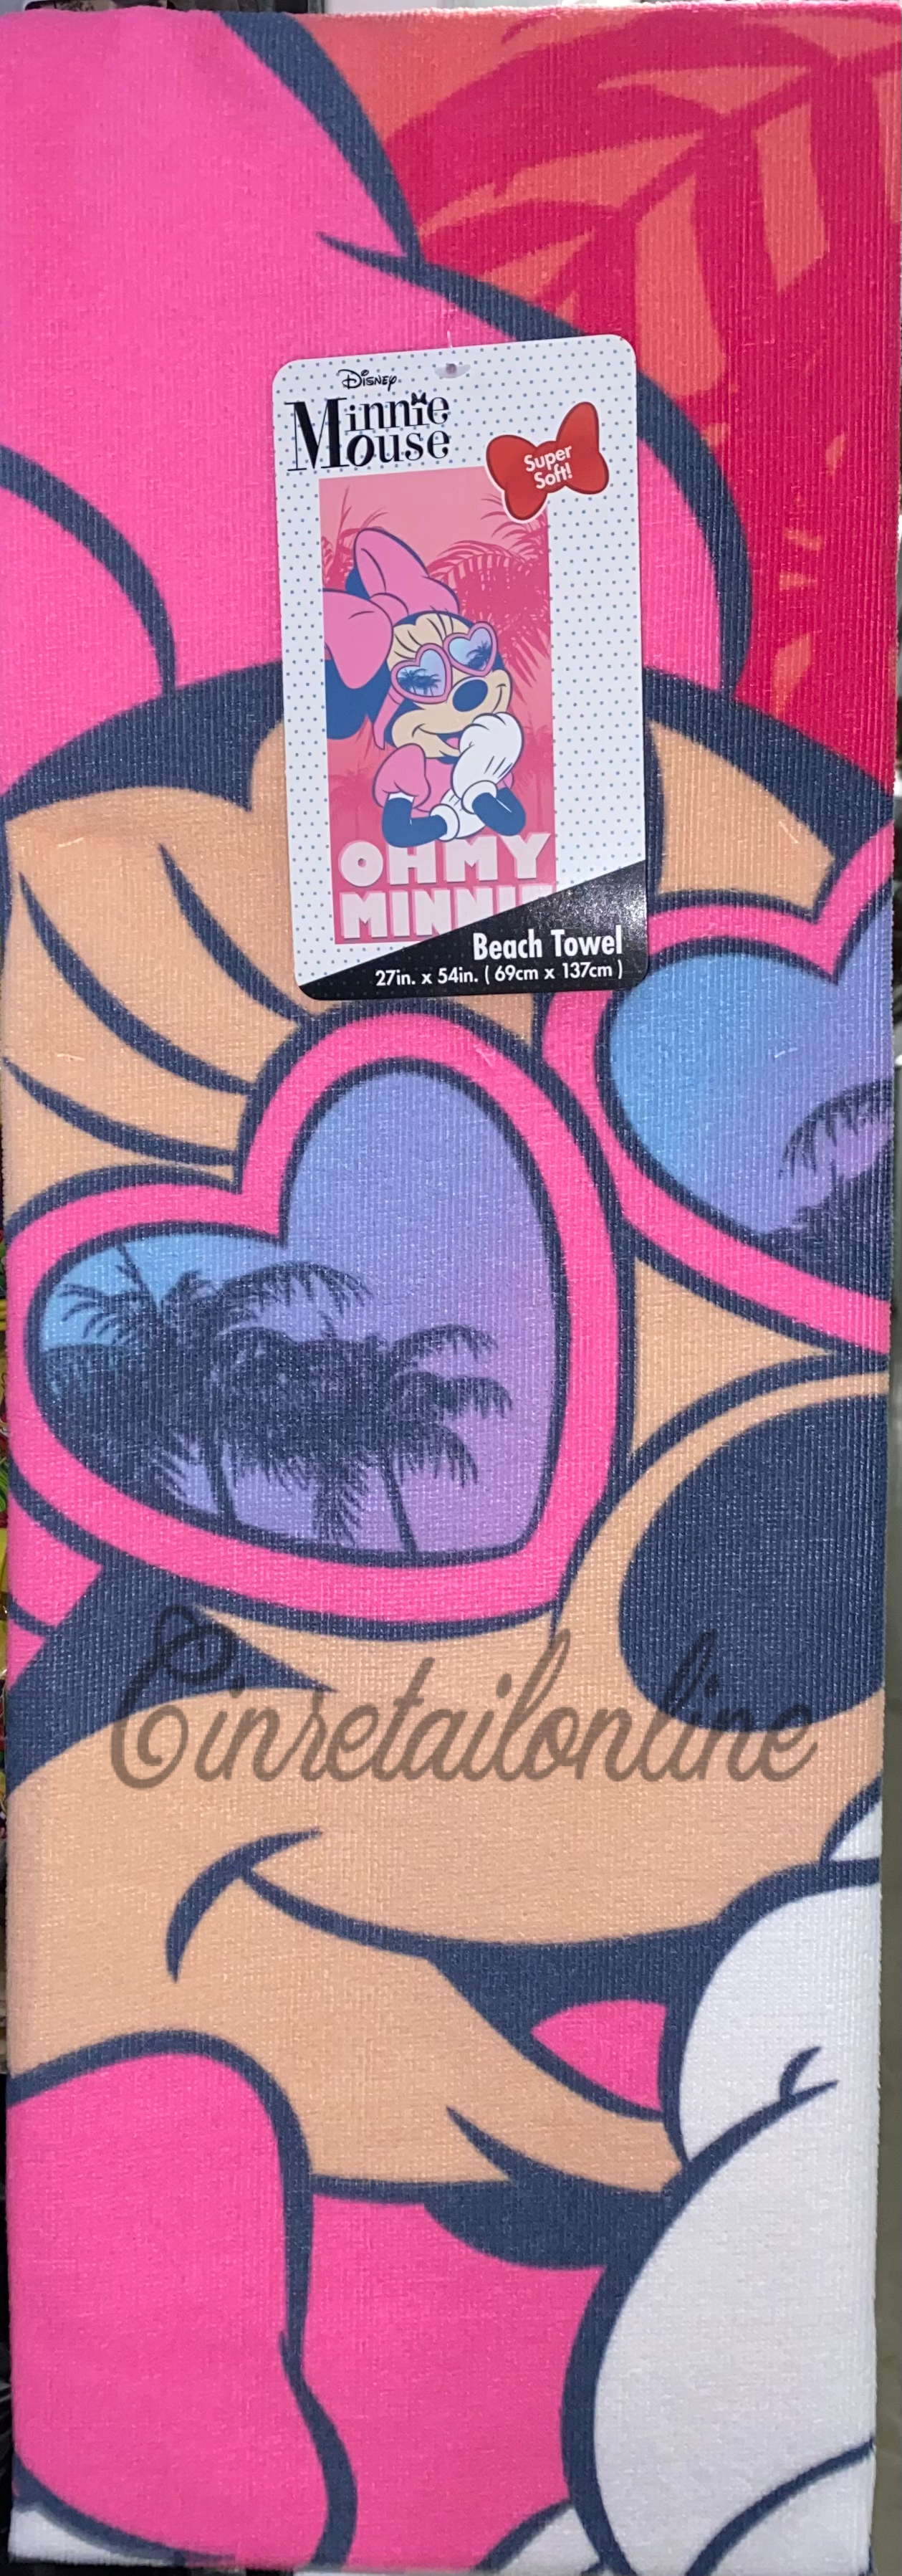 Minnie Mouse Beach towel